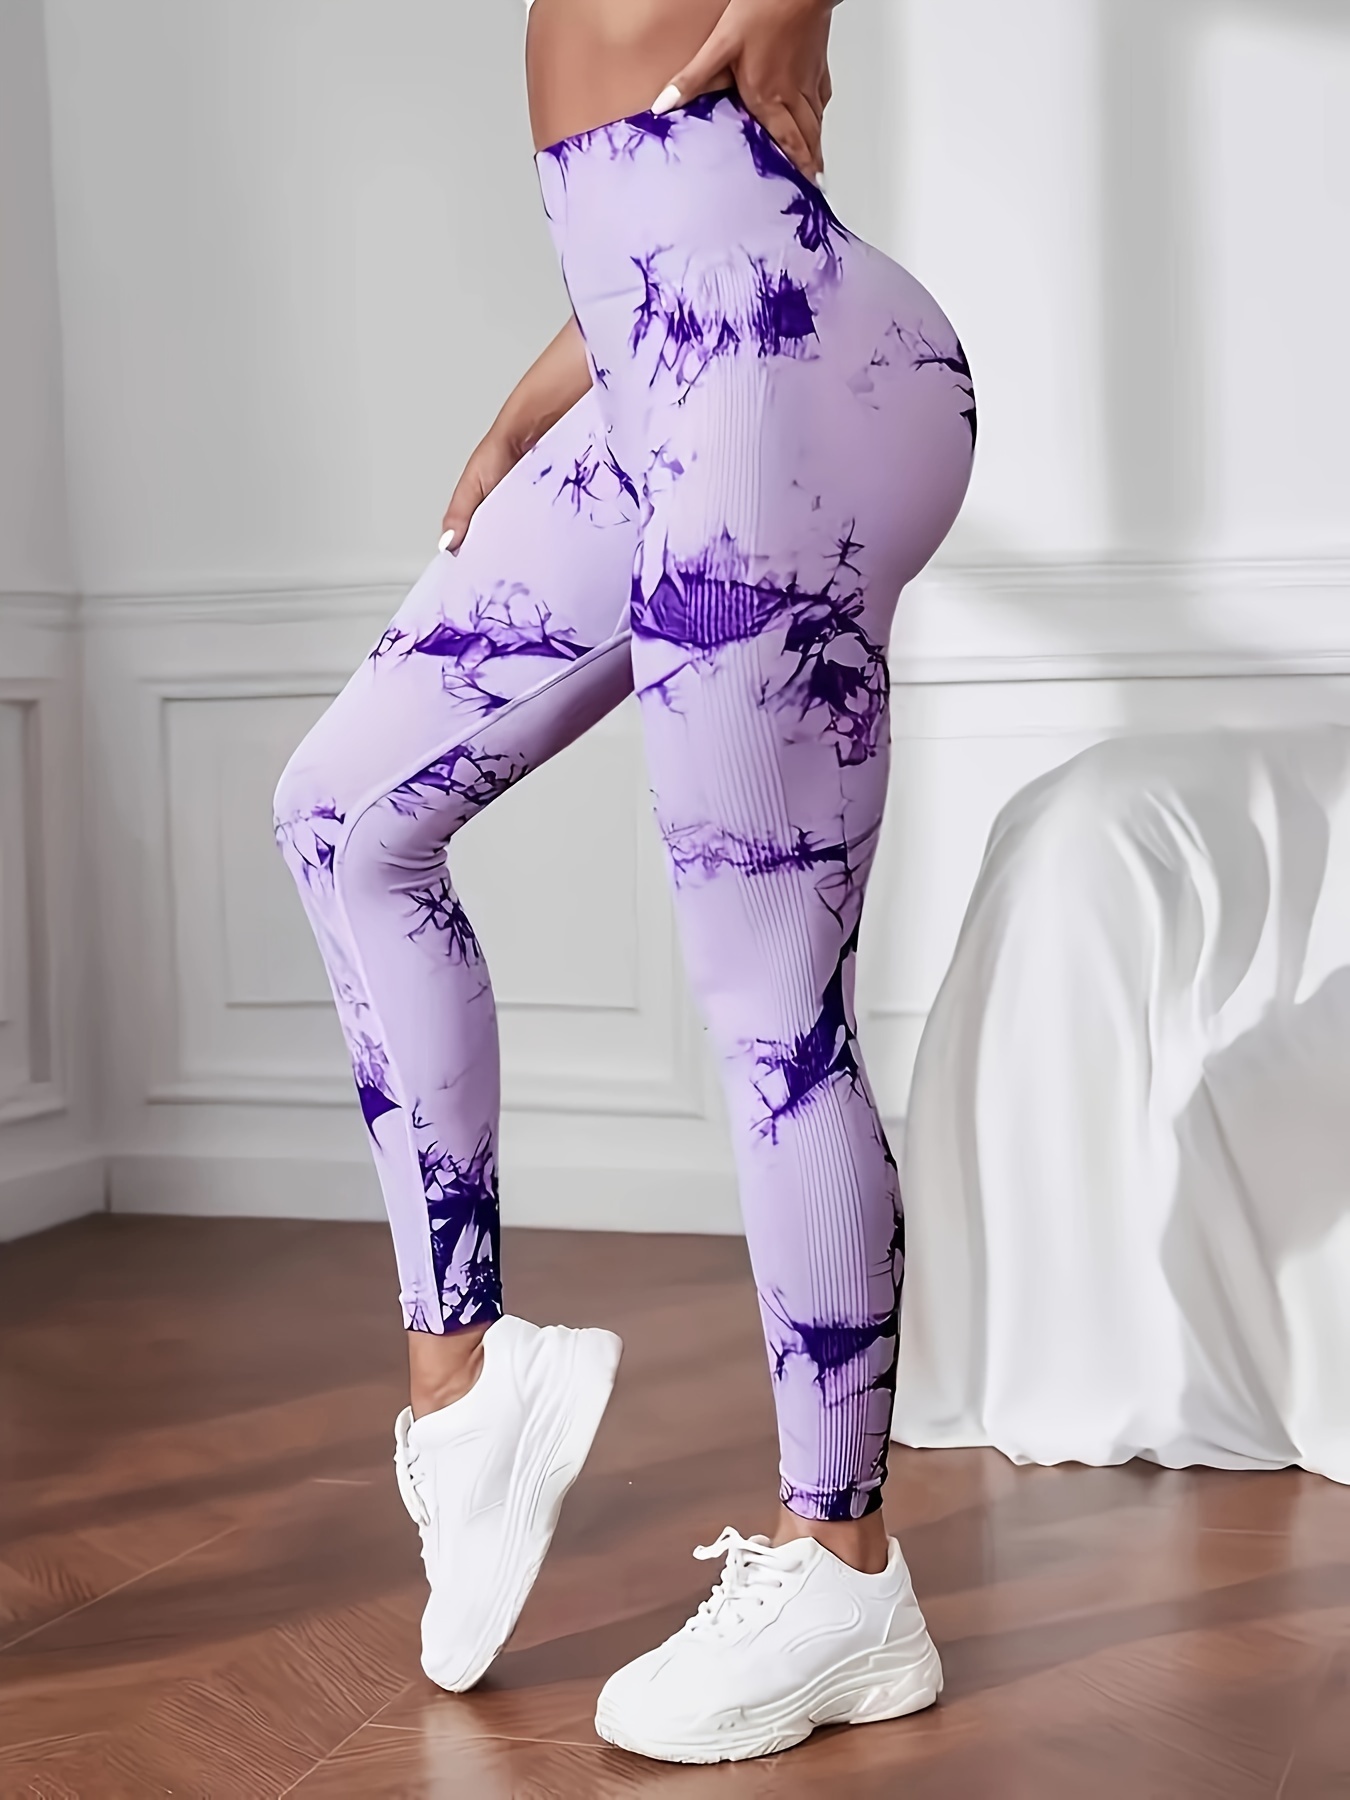 Purple, M) Tie Dye Yoga Pants - Push Up Gym Leggings - Seamless